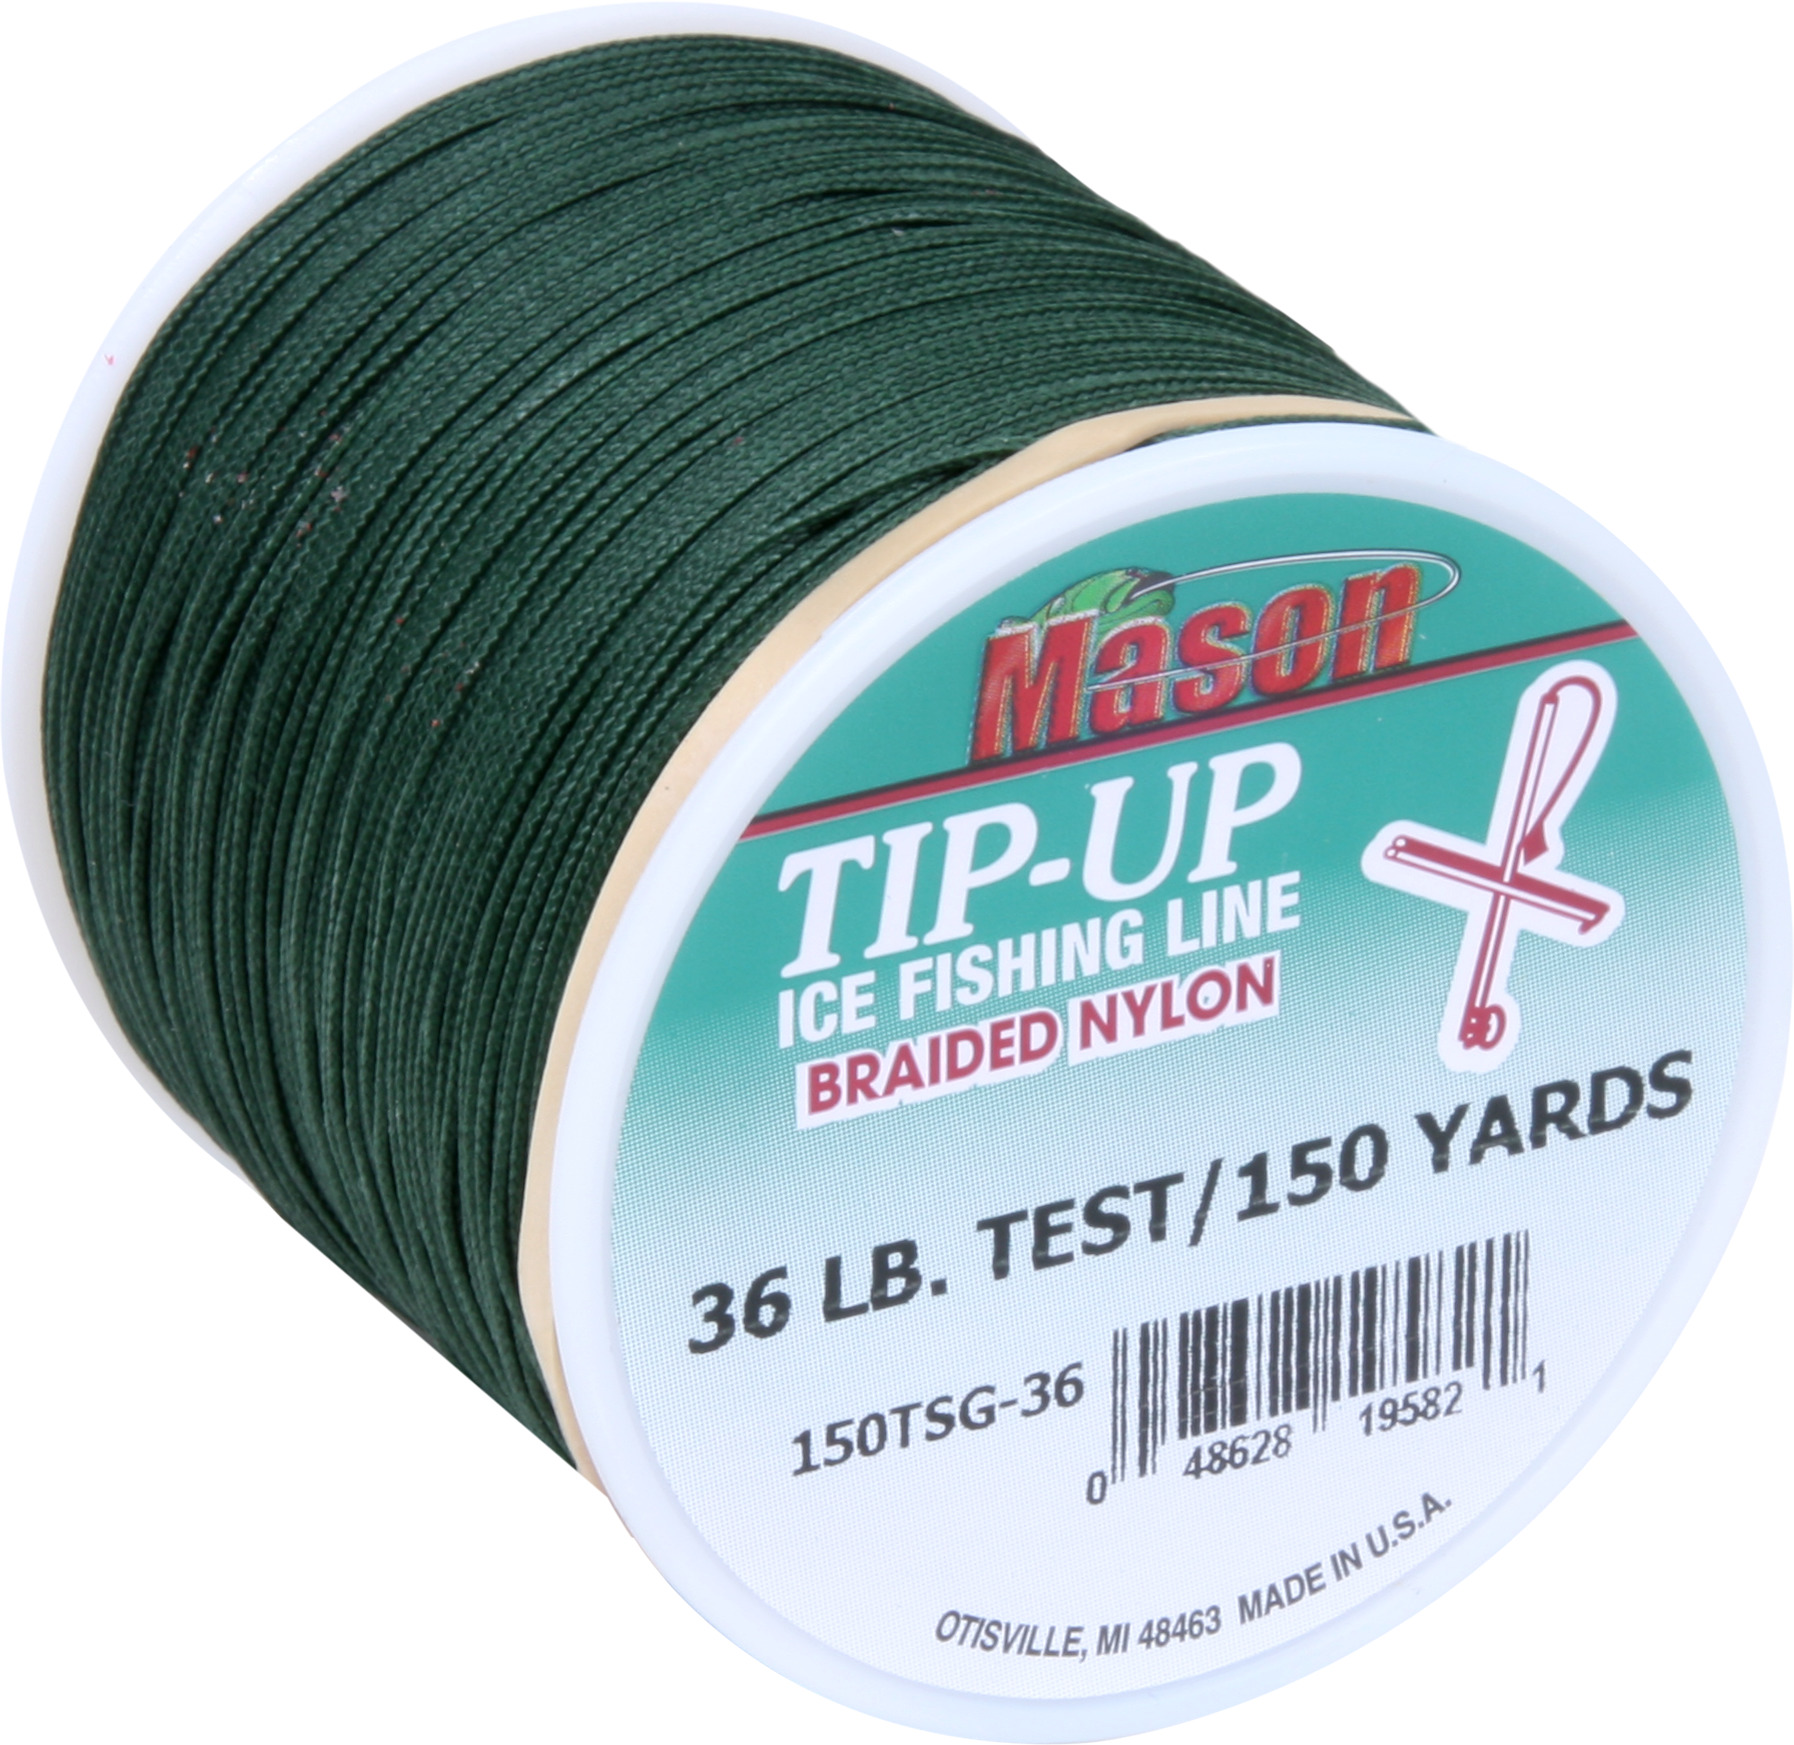 https://op2.0ps.us/original/opplanet-mason-braided-nylon-tip-up-squidding-line-36lb-150yds-grn-6bx-150tsg-36-main